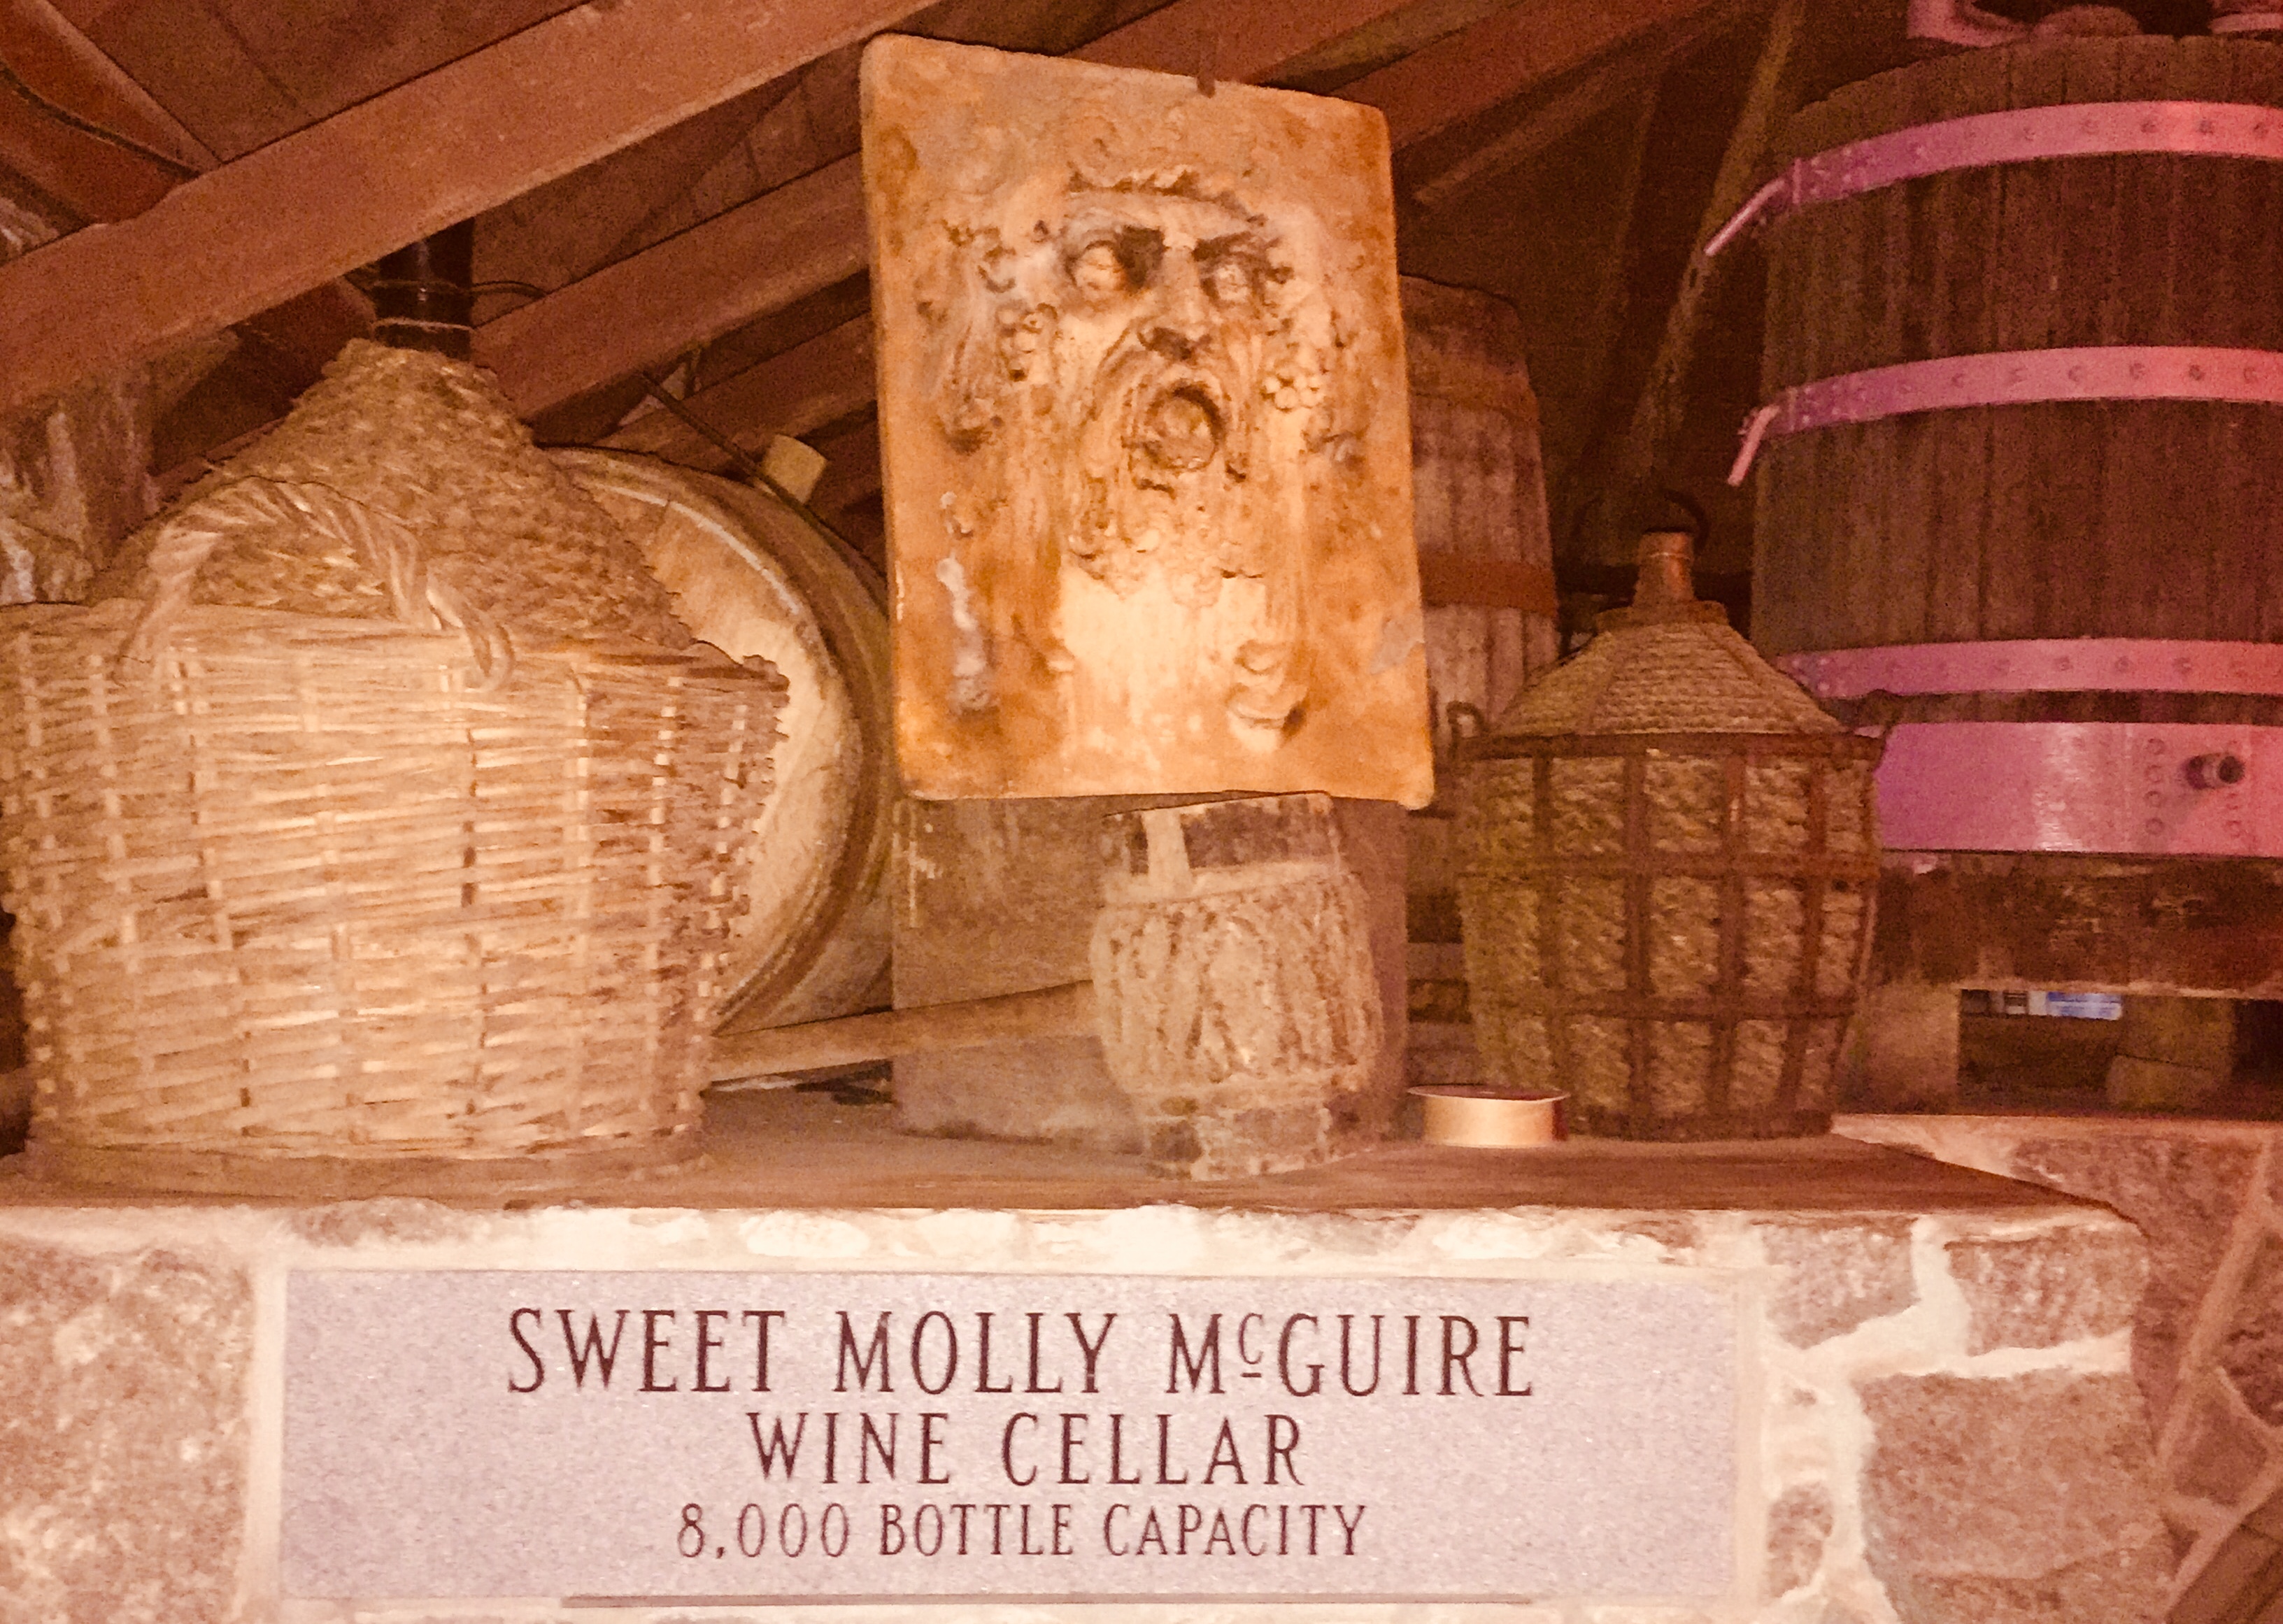 McGuire's wine cellar